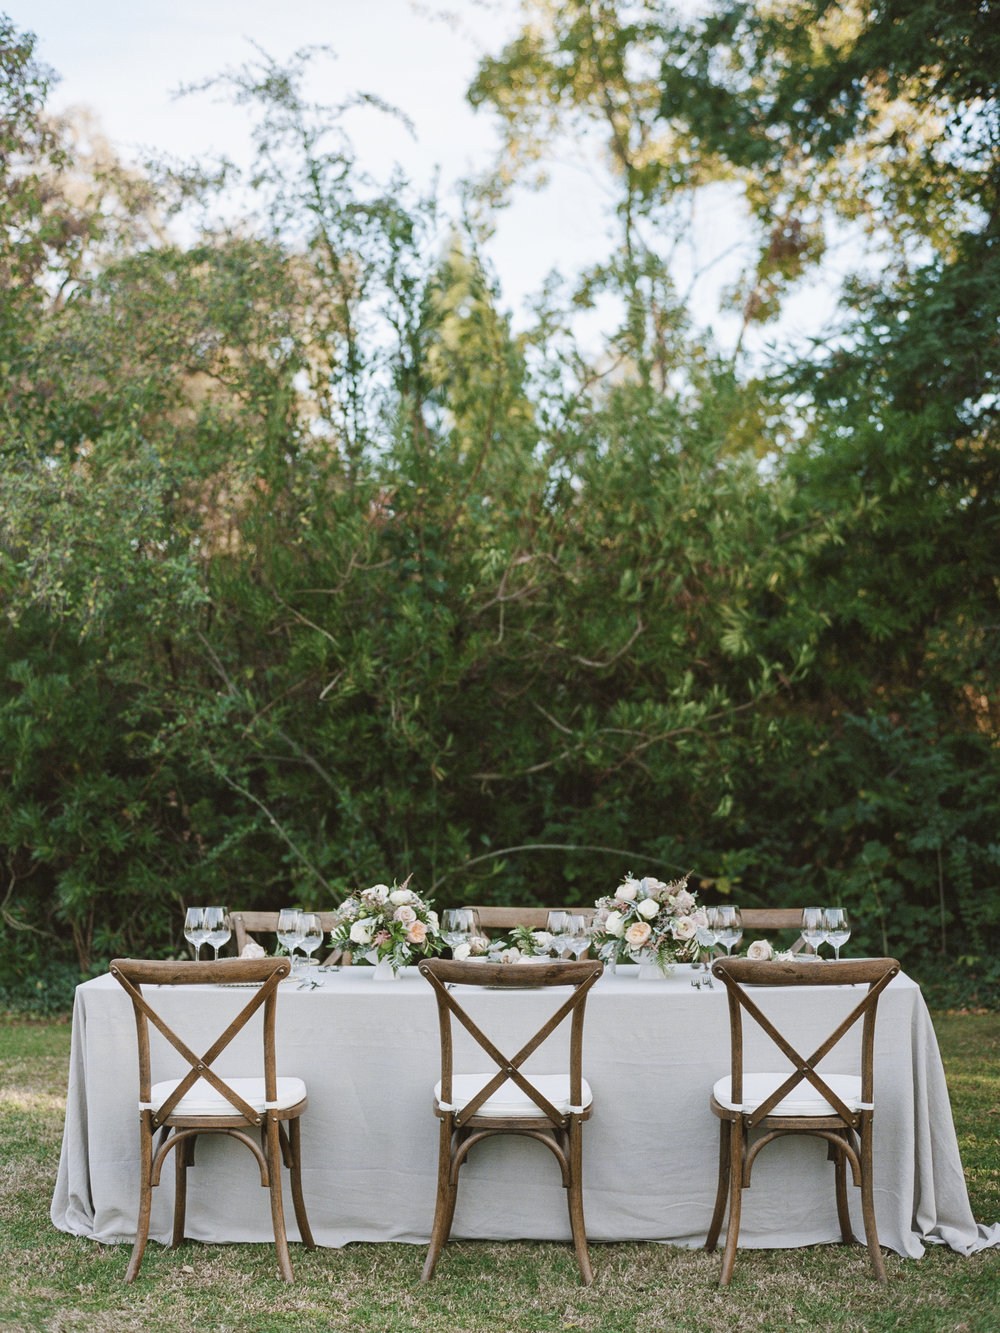 Violette-fleurs-roseville-sacramento-california-Flower-farm-inn-wedding-florist-spring-tablescape-blush-peach-grays-greenery.jpg